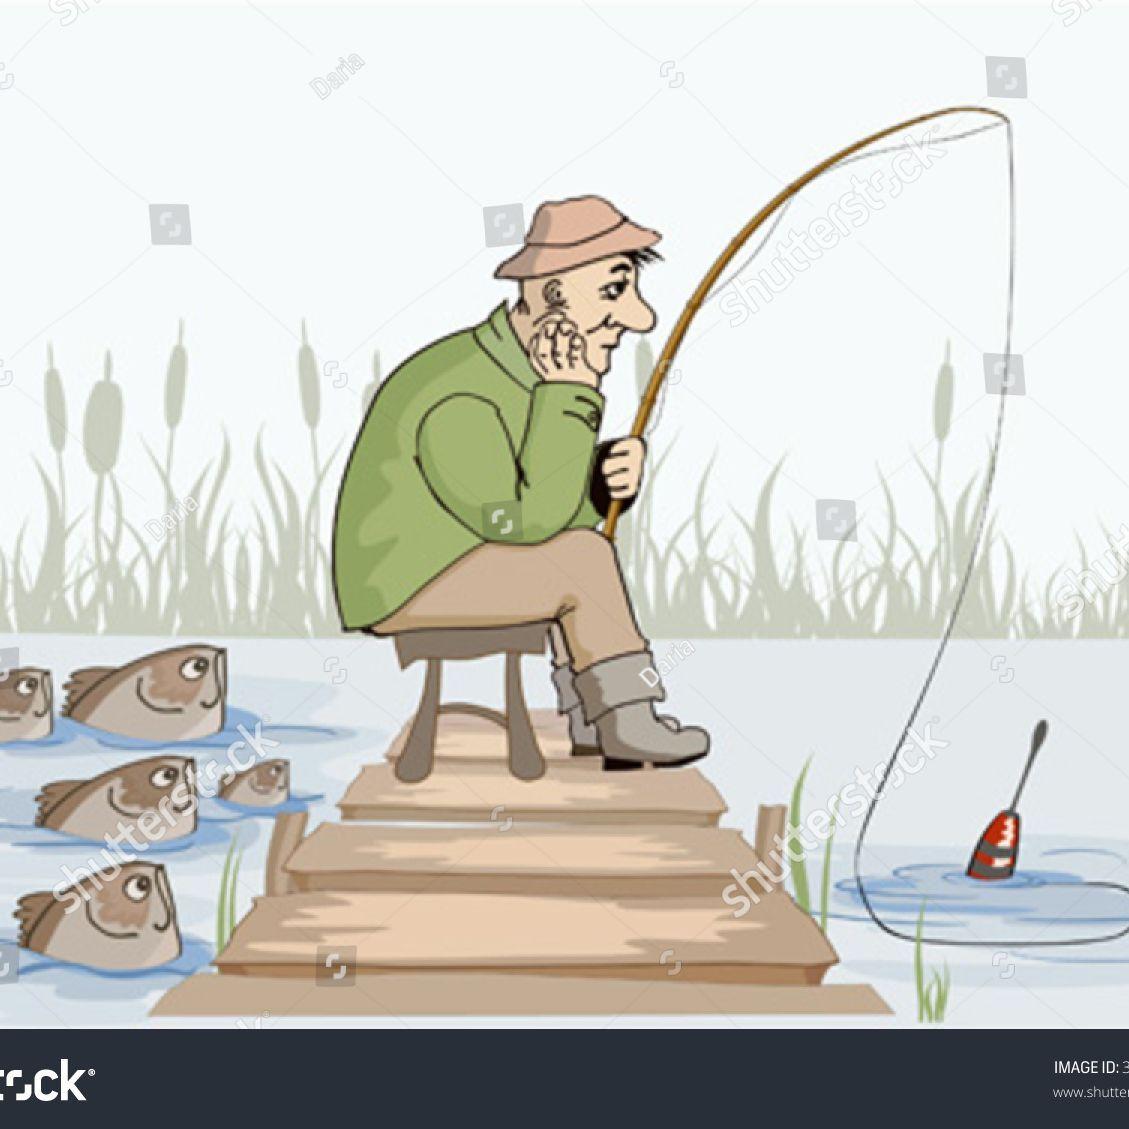 Player Fisherman avatar